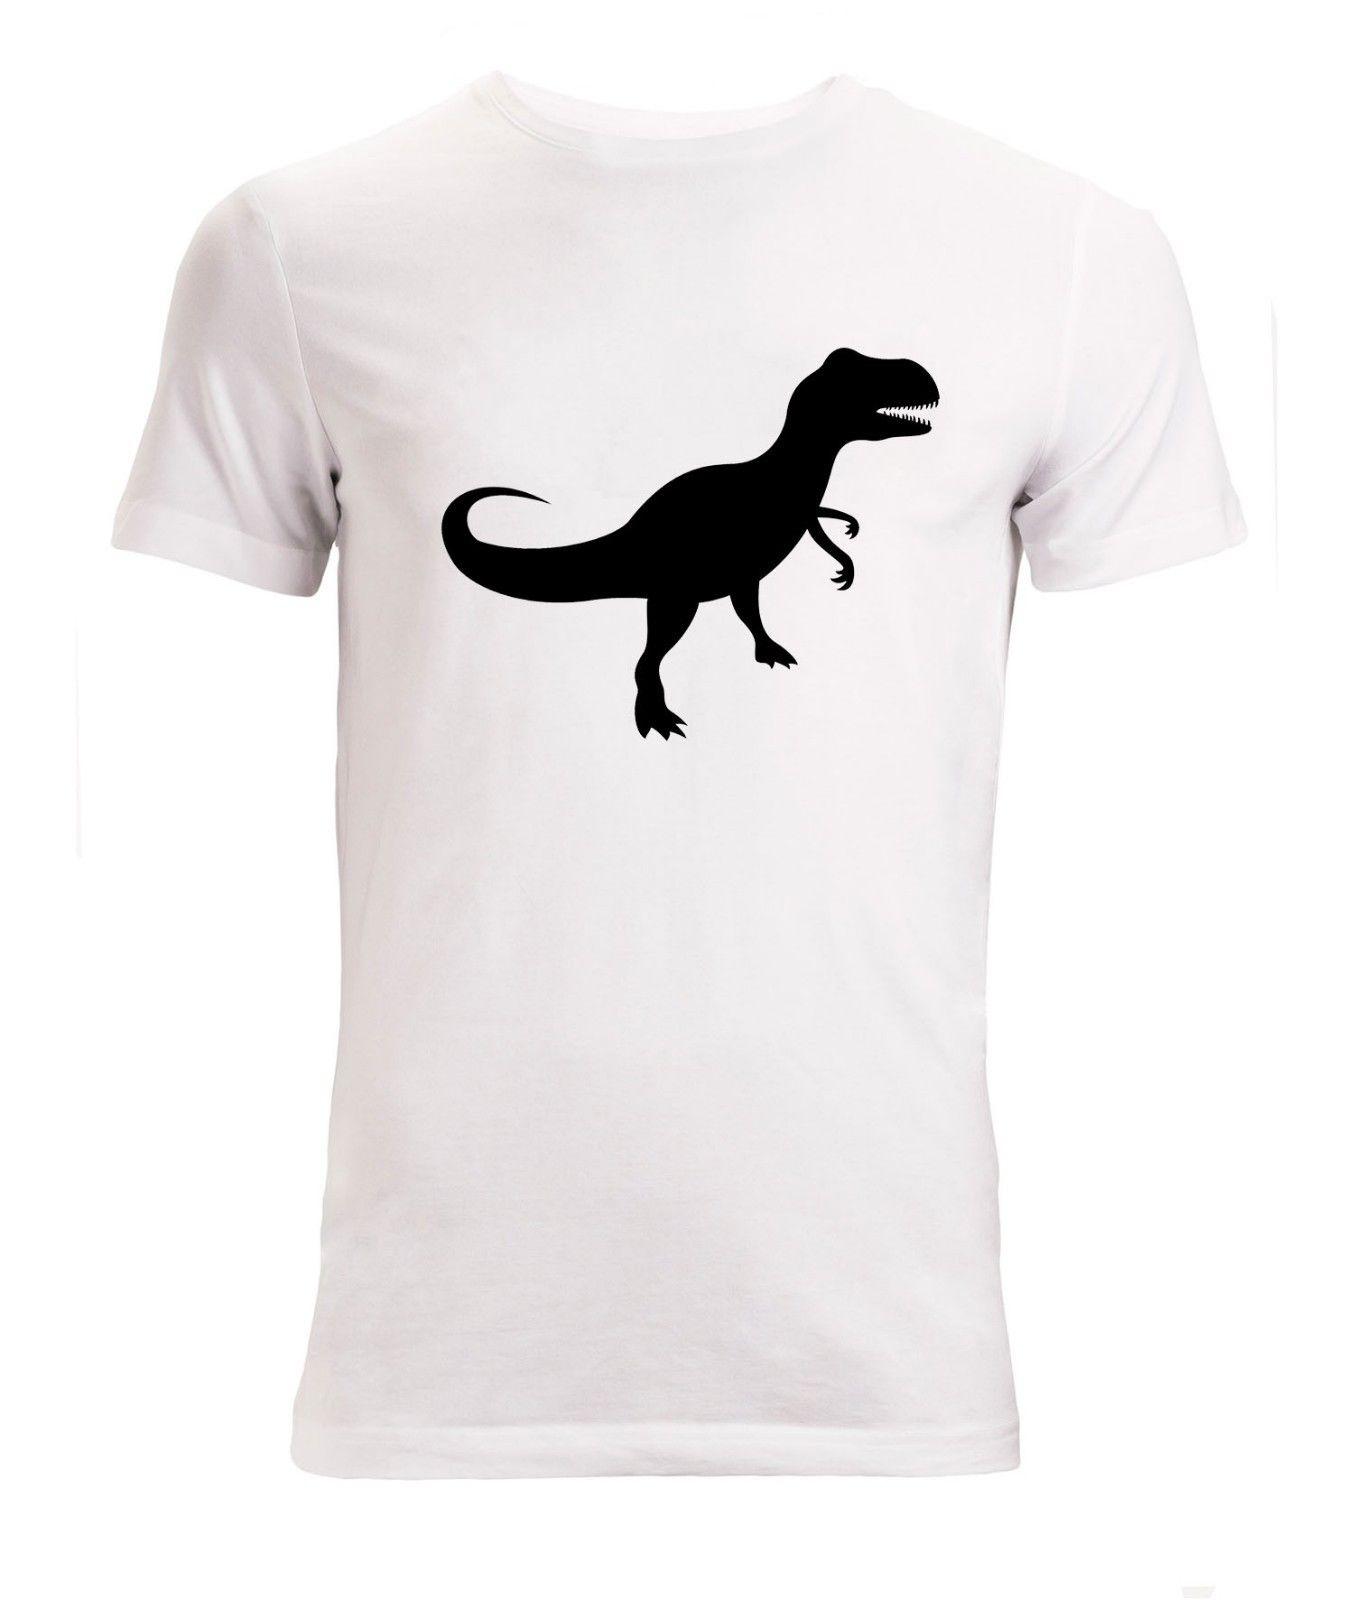 T-Rex Logo - Dinosaur T-Rex Graphic Logo Artwork men s (woman s available) t shirt white  Men Women Unisex Fashion tshirt Free Shipping